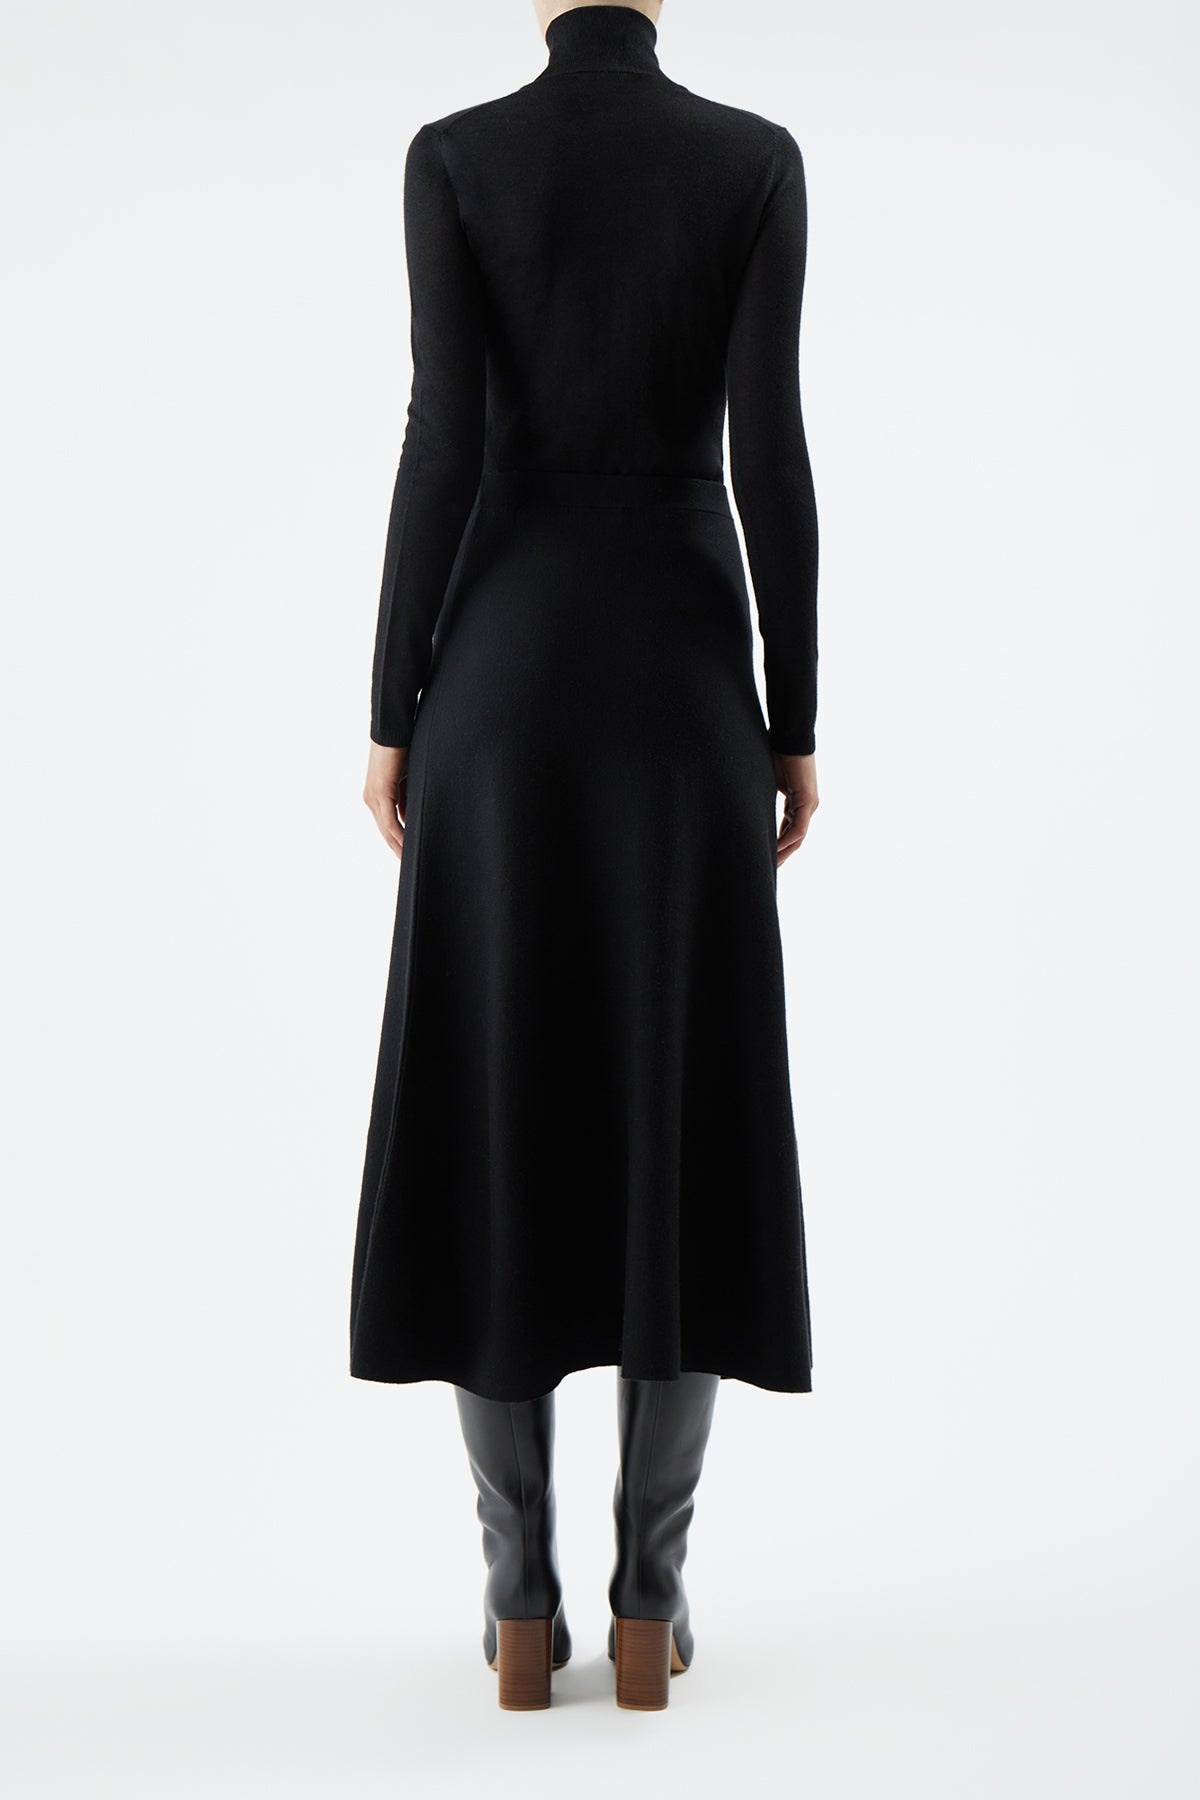 Freddie Skirt in Black Cashmere Wool - 4